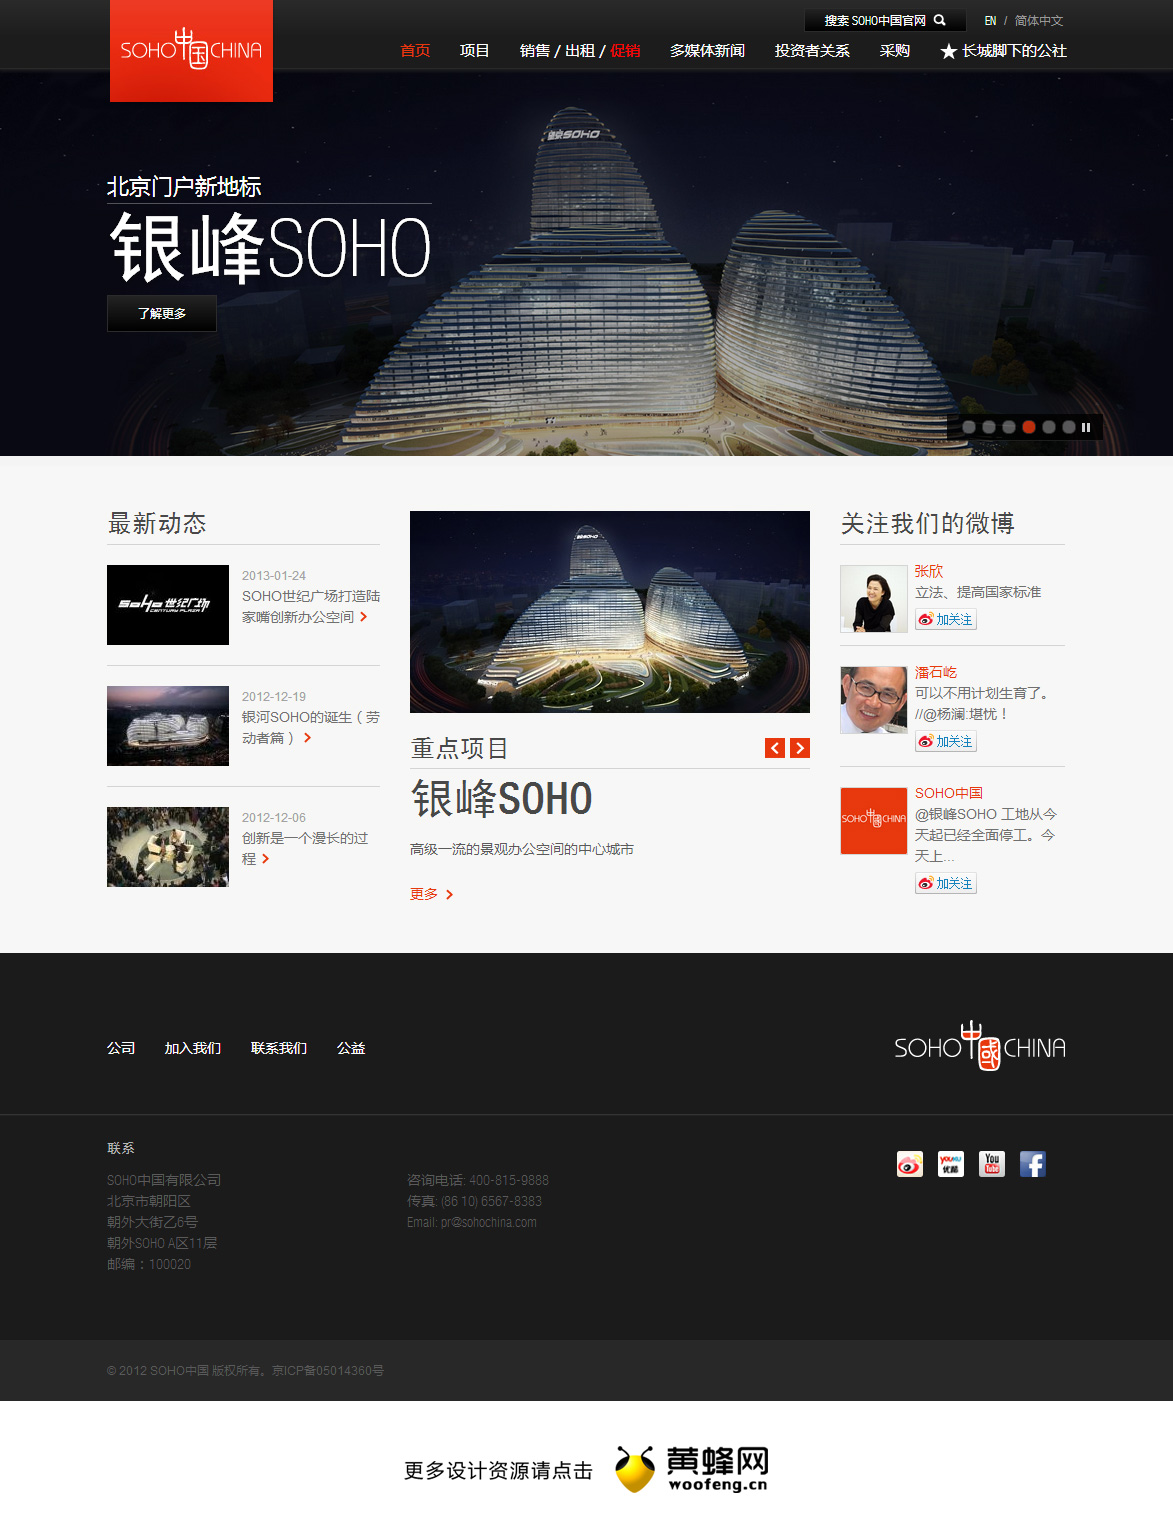 SOHO中国网站，来自黄蜂网https://woofeng.cn/